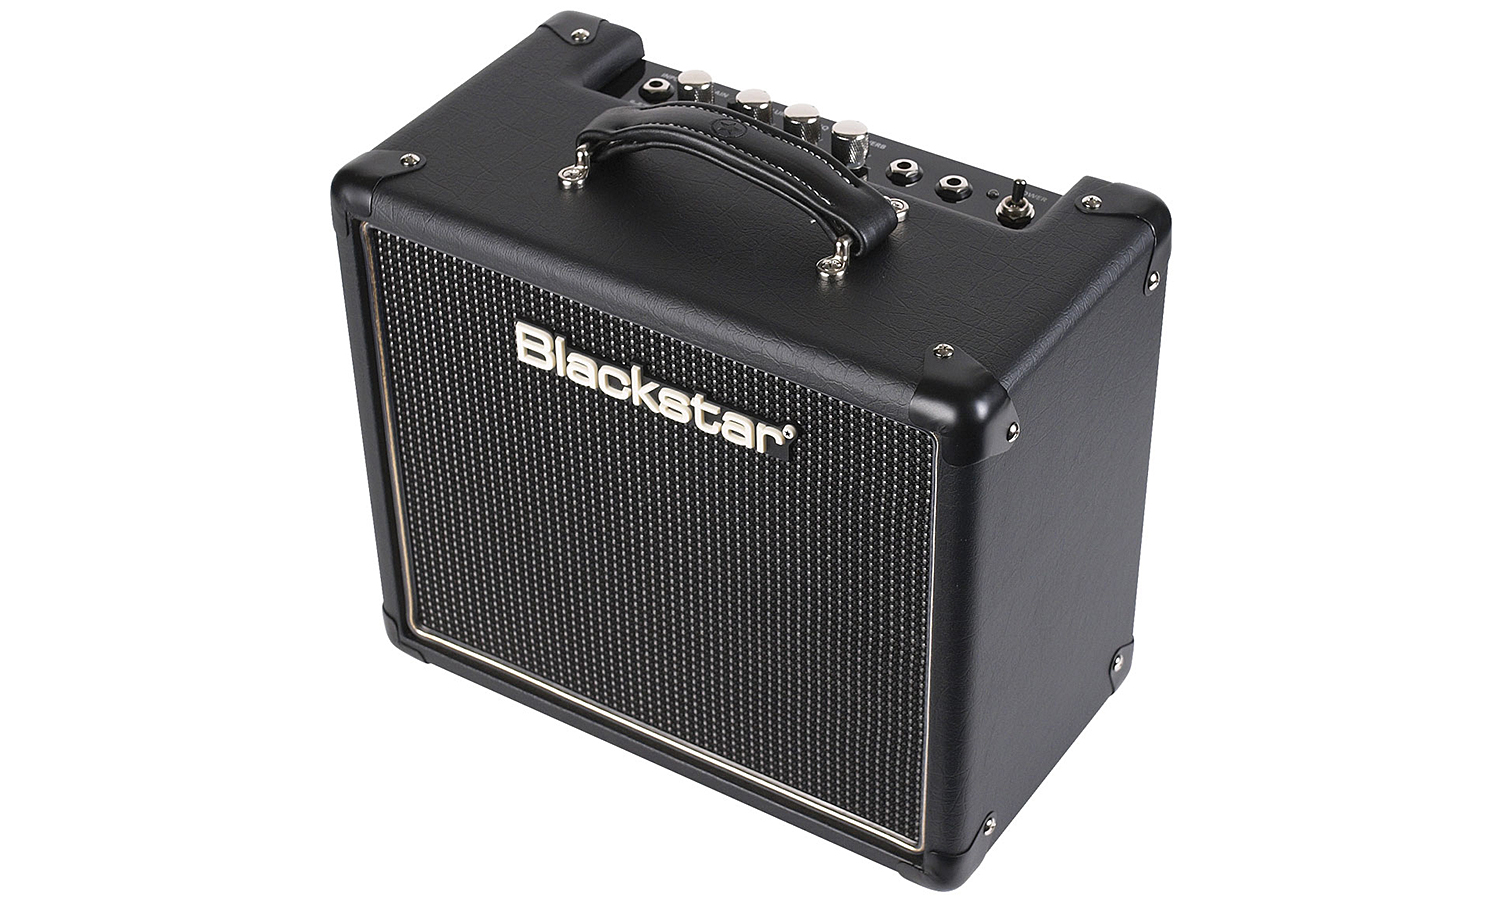 Blackstar Ht-1r 1w 1x8 Black - Electric guitar combo amp - Variation 1